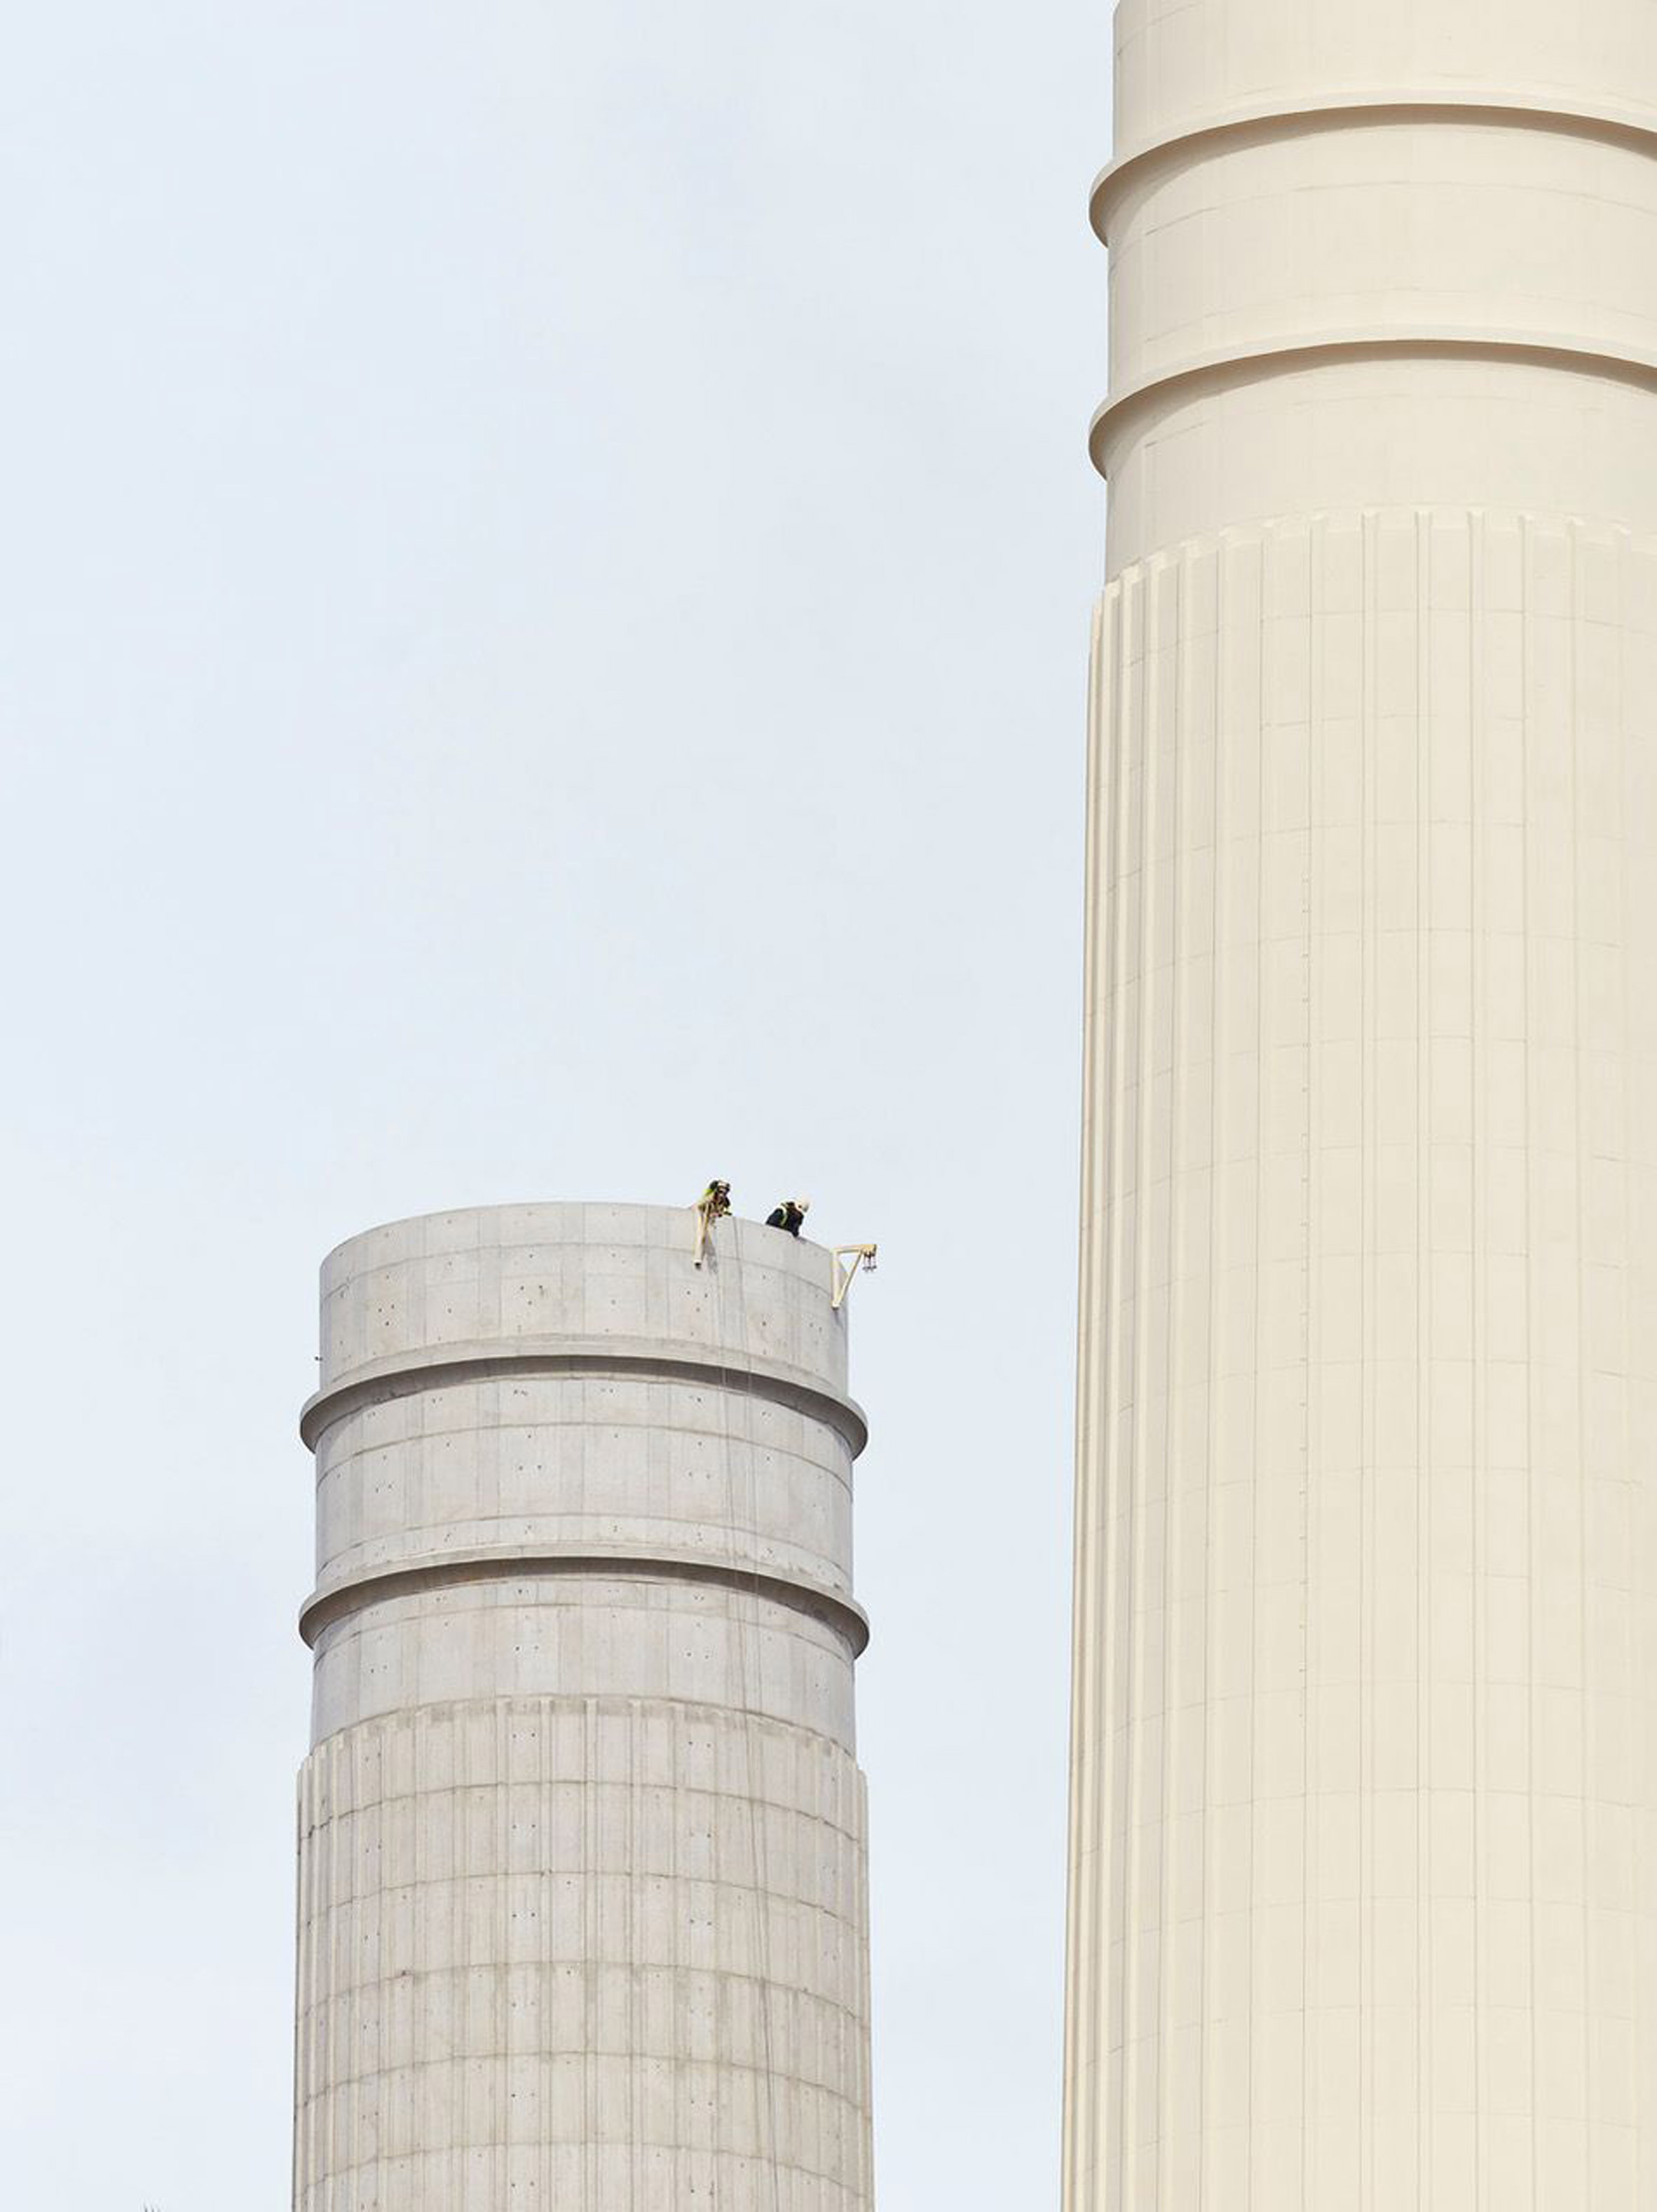 Battersea Power Station chimneys by Dennis Gilbert